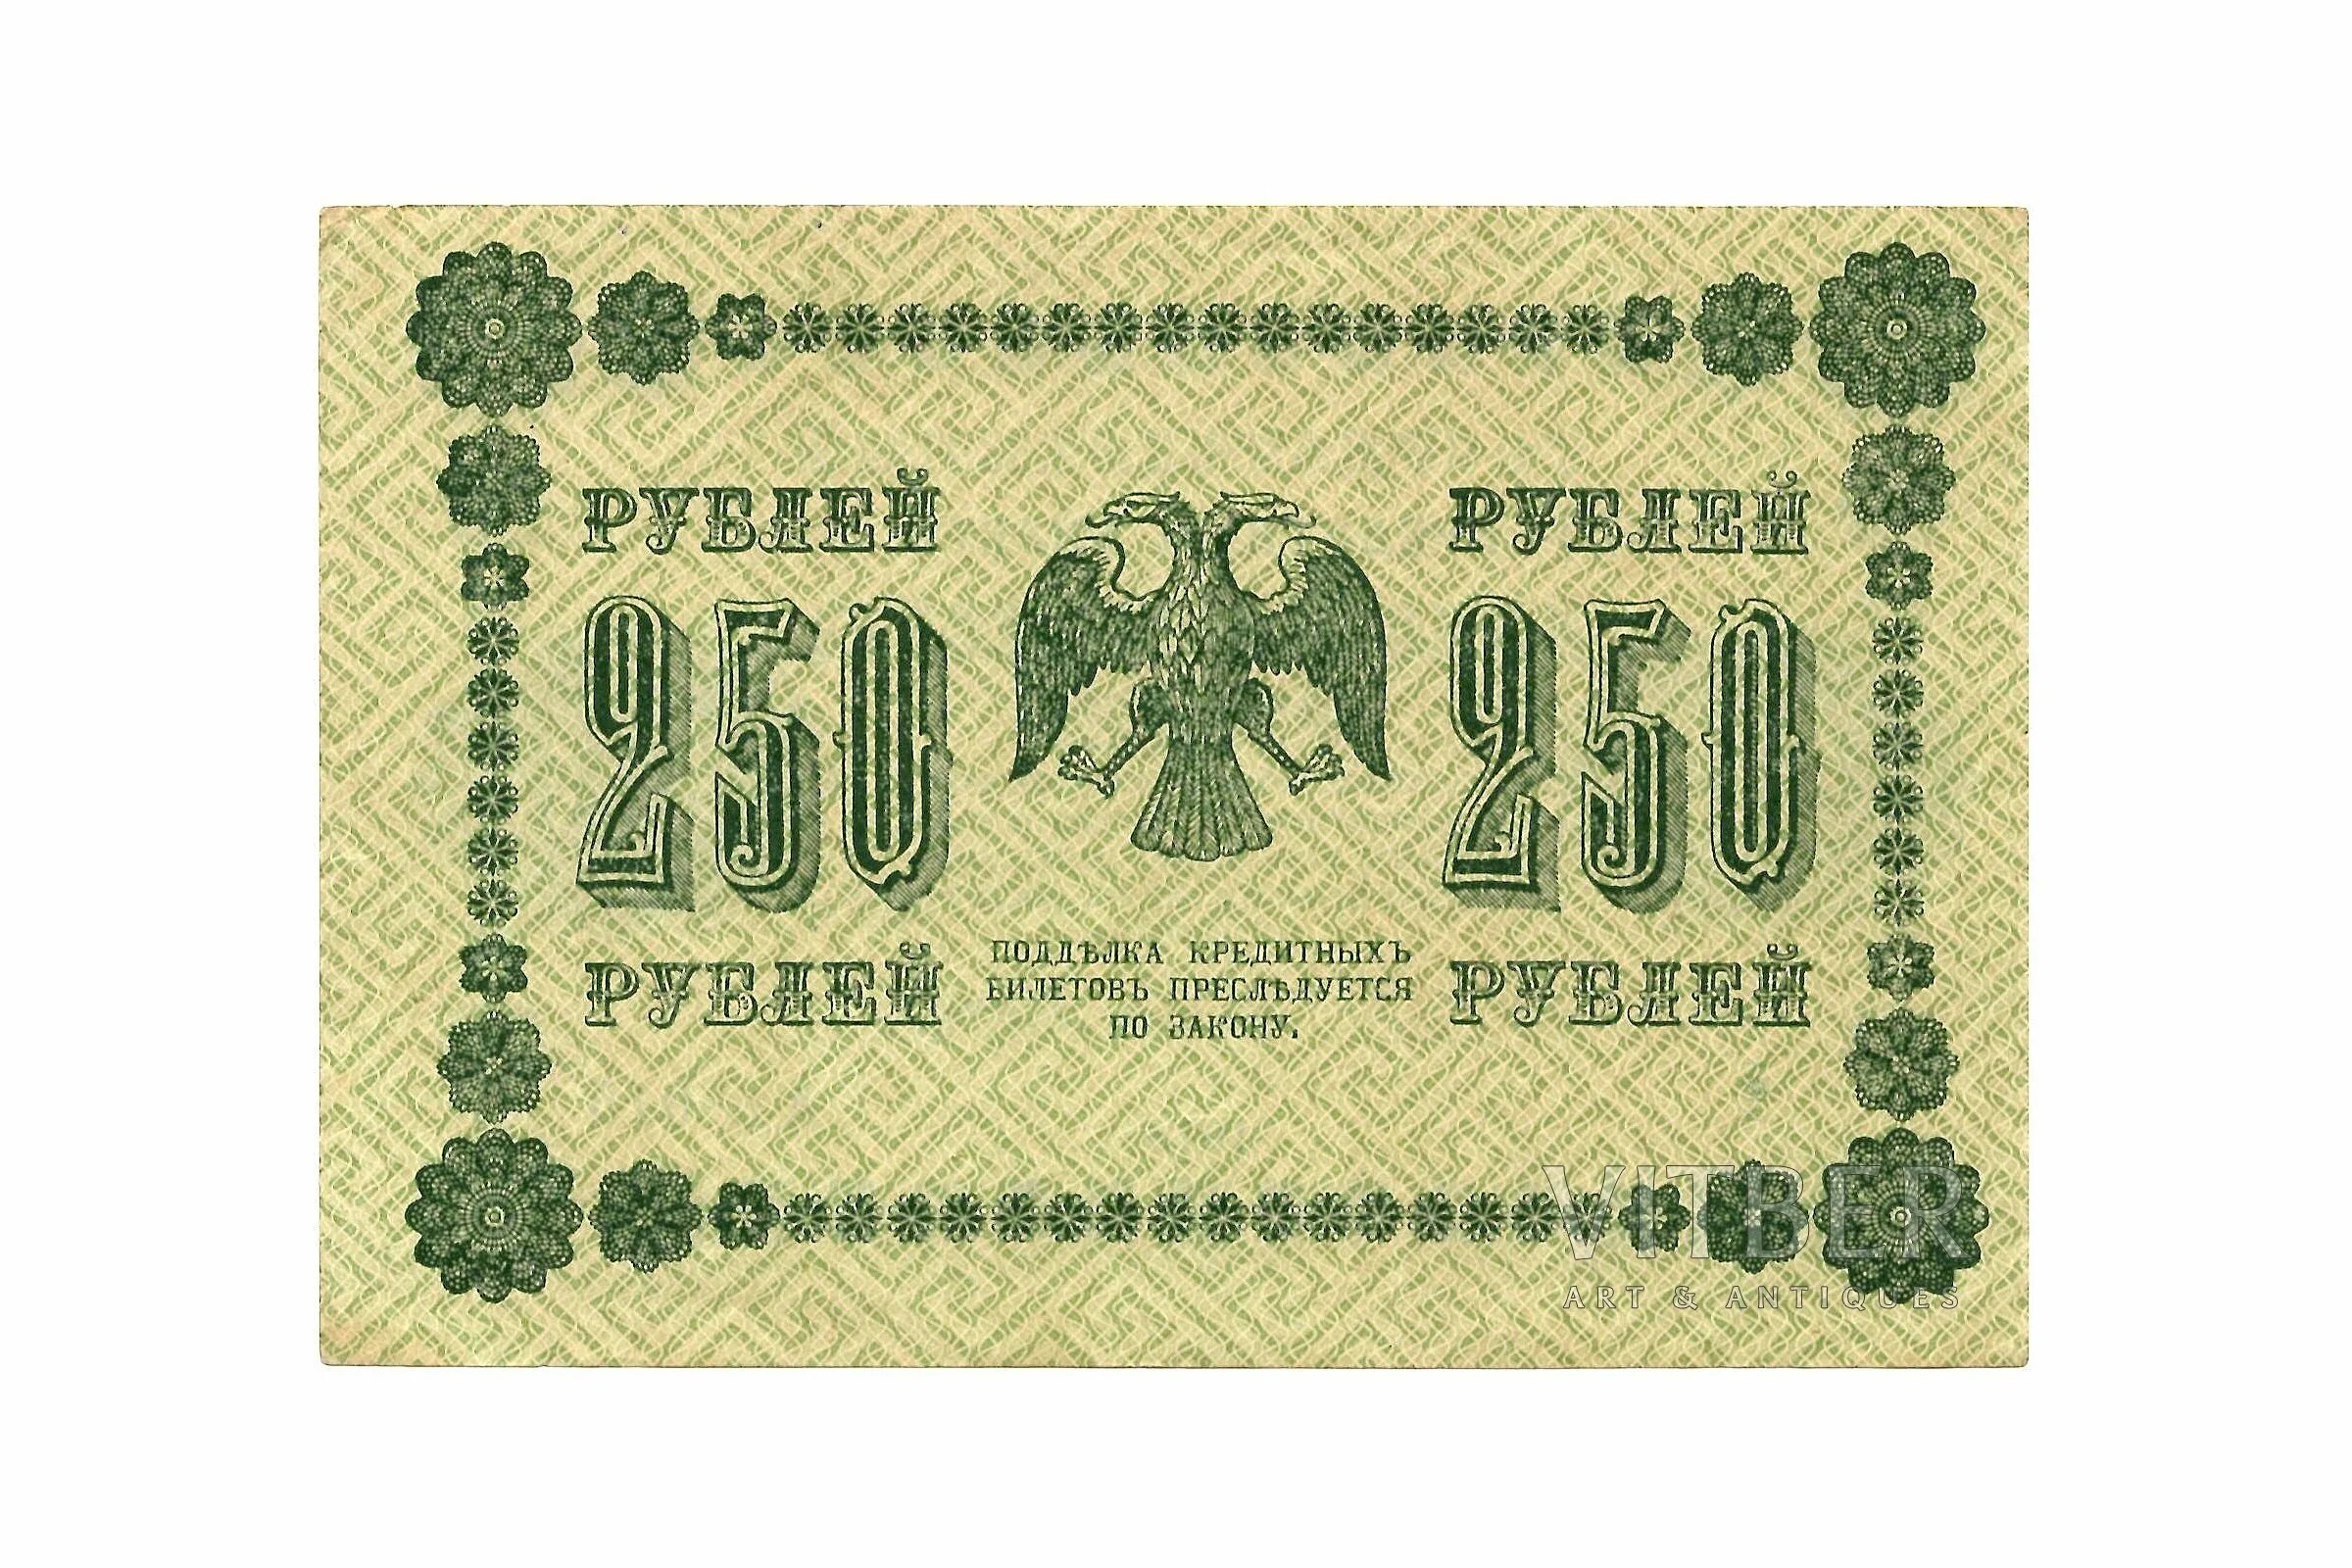 250 Рублей 1918 года. Банкнота 250 рублей 1918 года. 250 Рублей купюра. 250 Рублей 1918 АА-115.